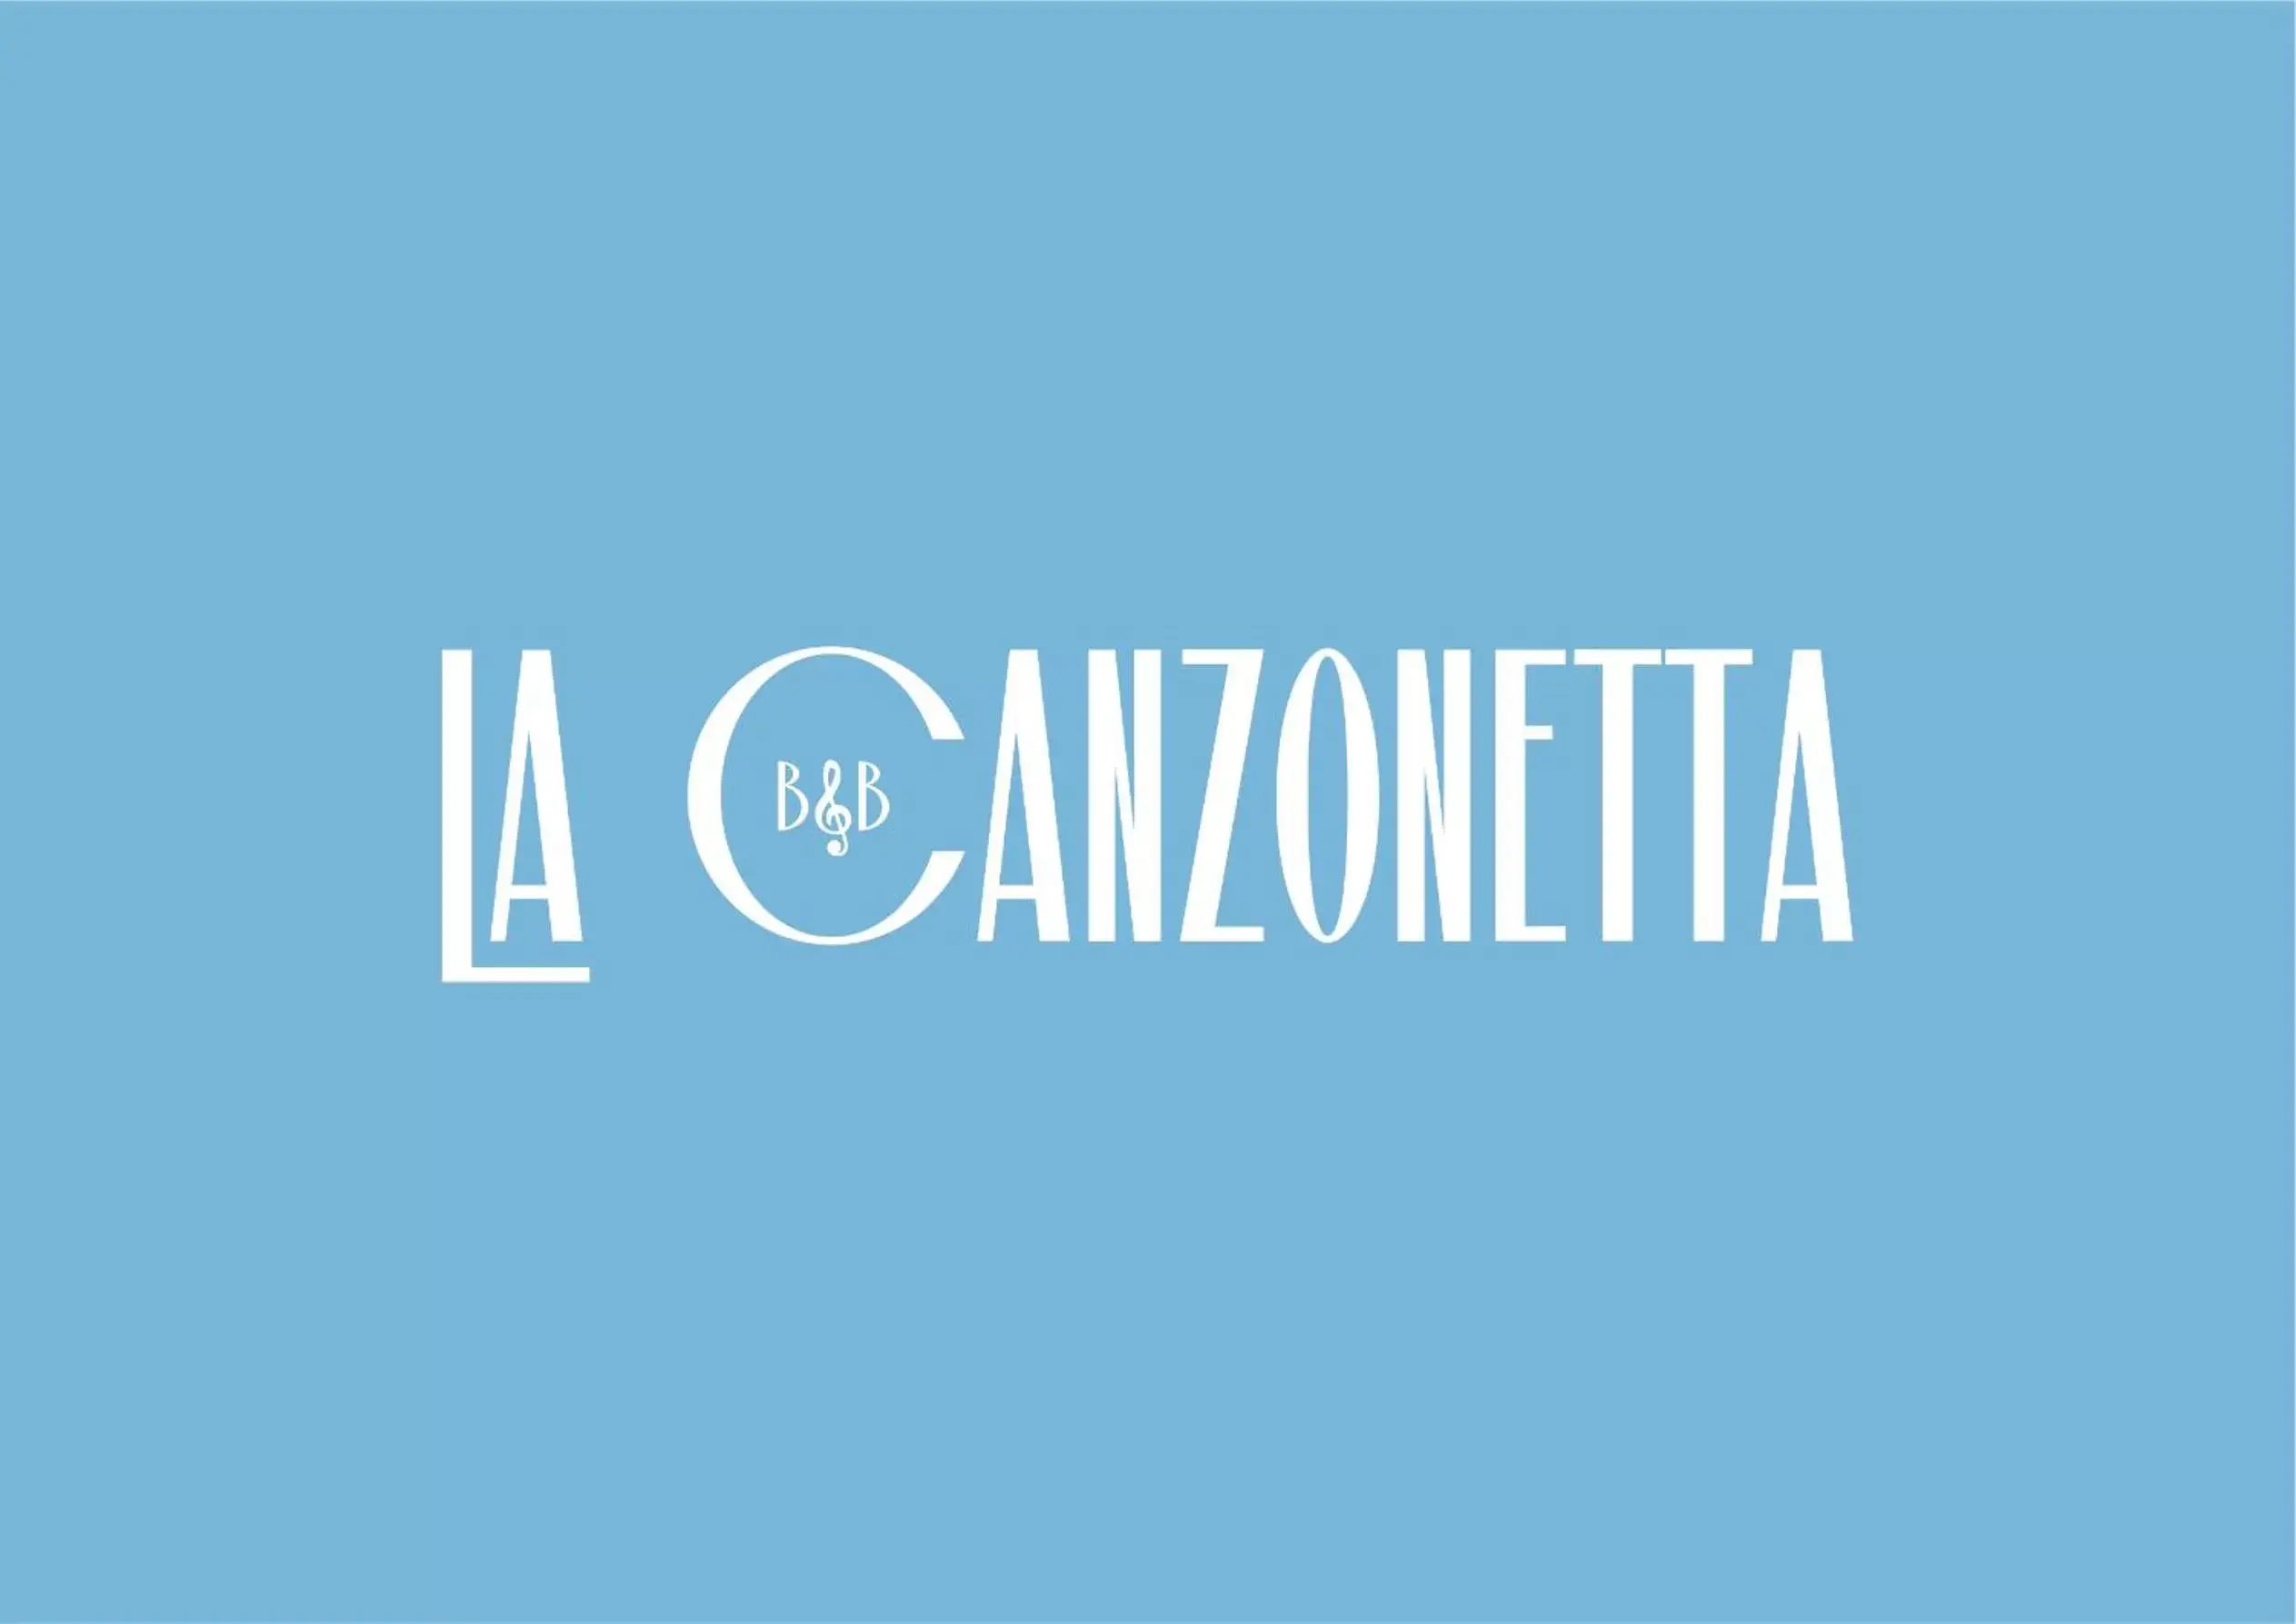 Property logo or sign in B&B La Canzonetta